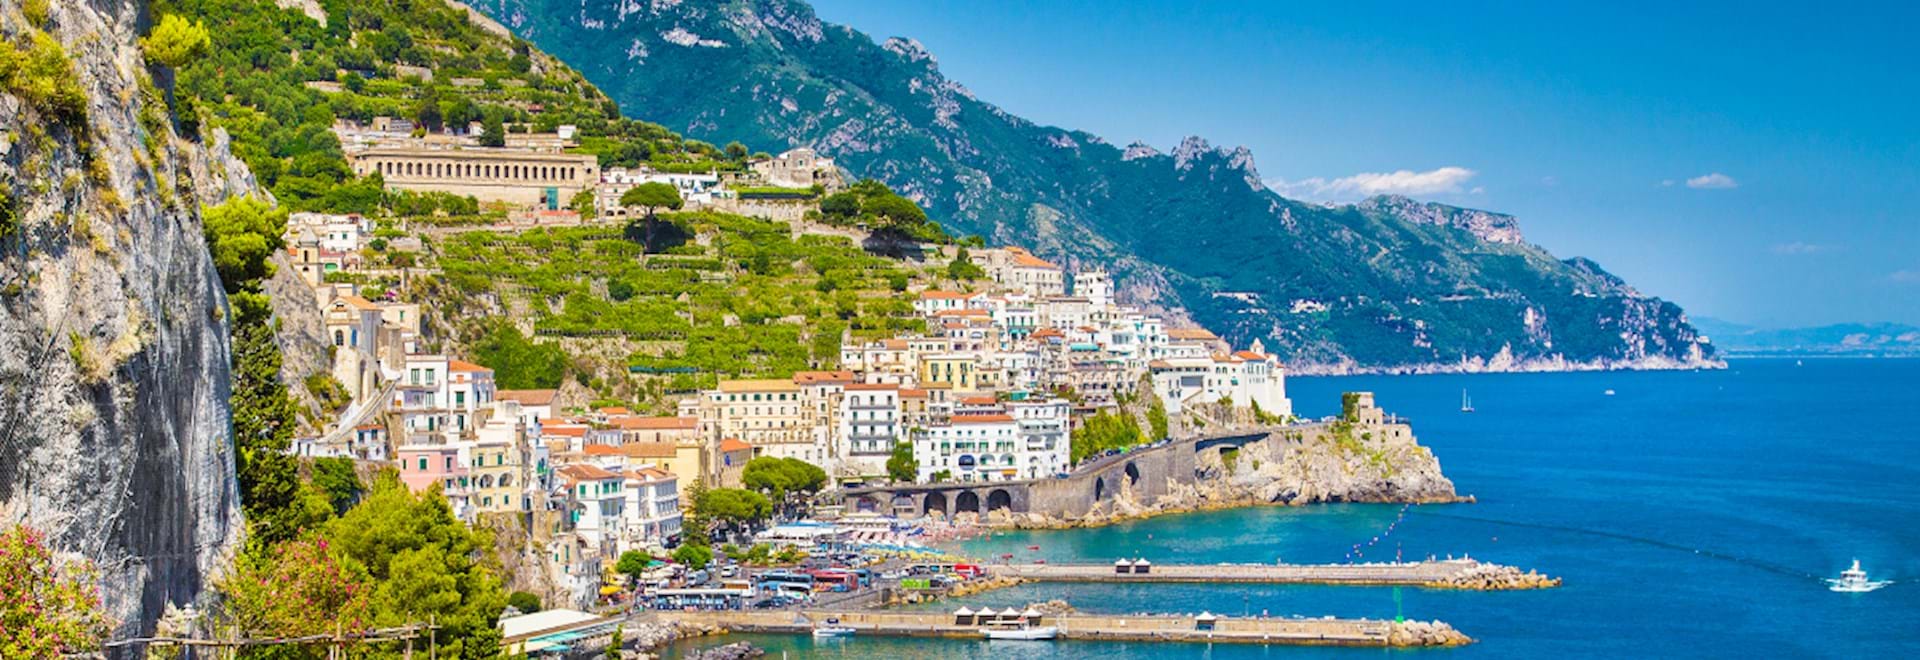 Scenic view of Amalfi